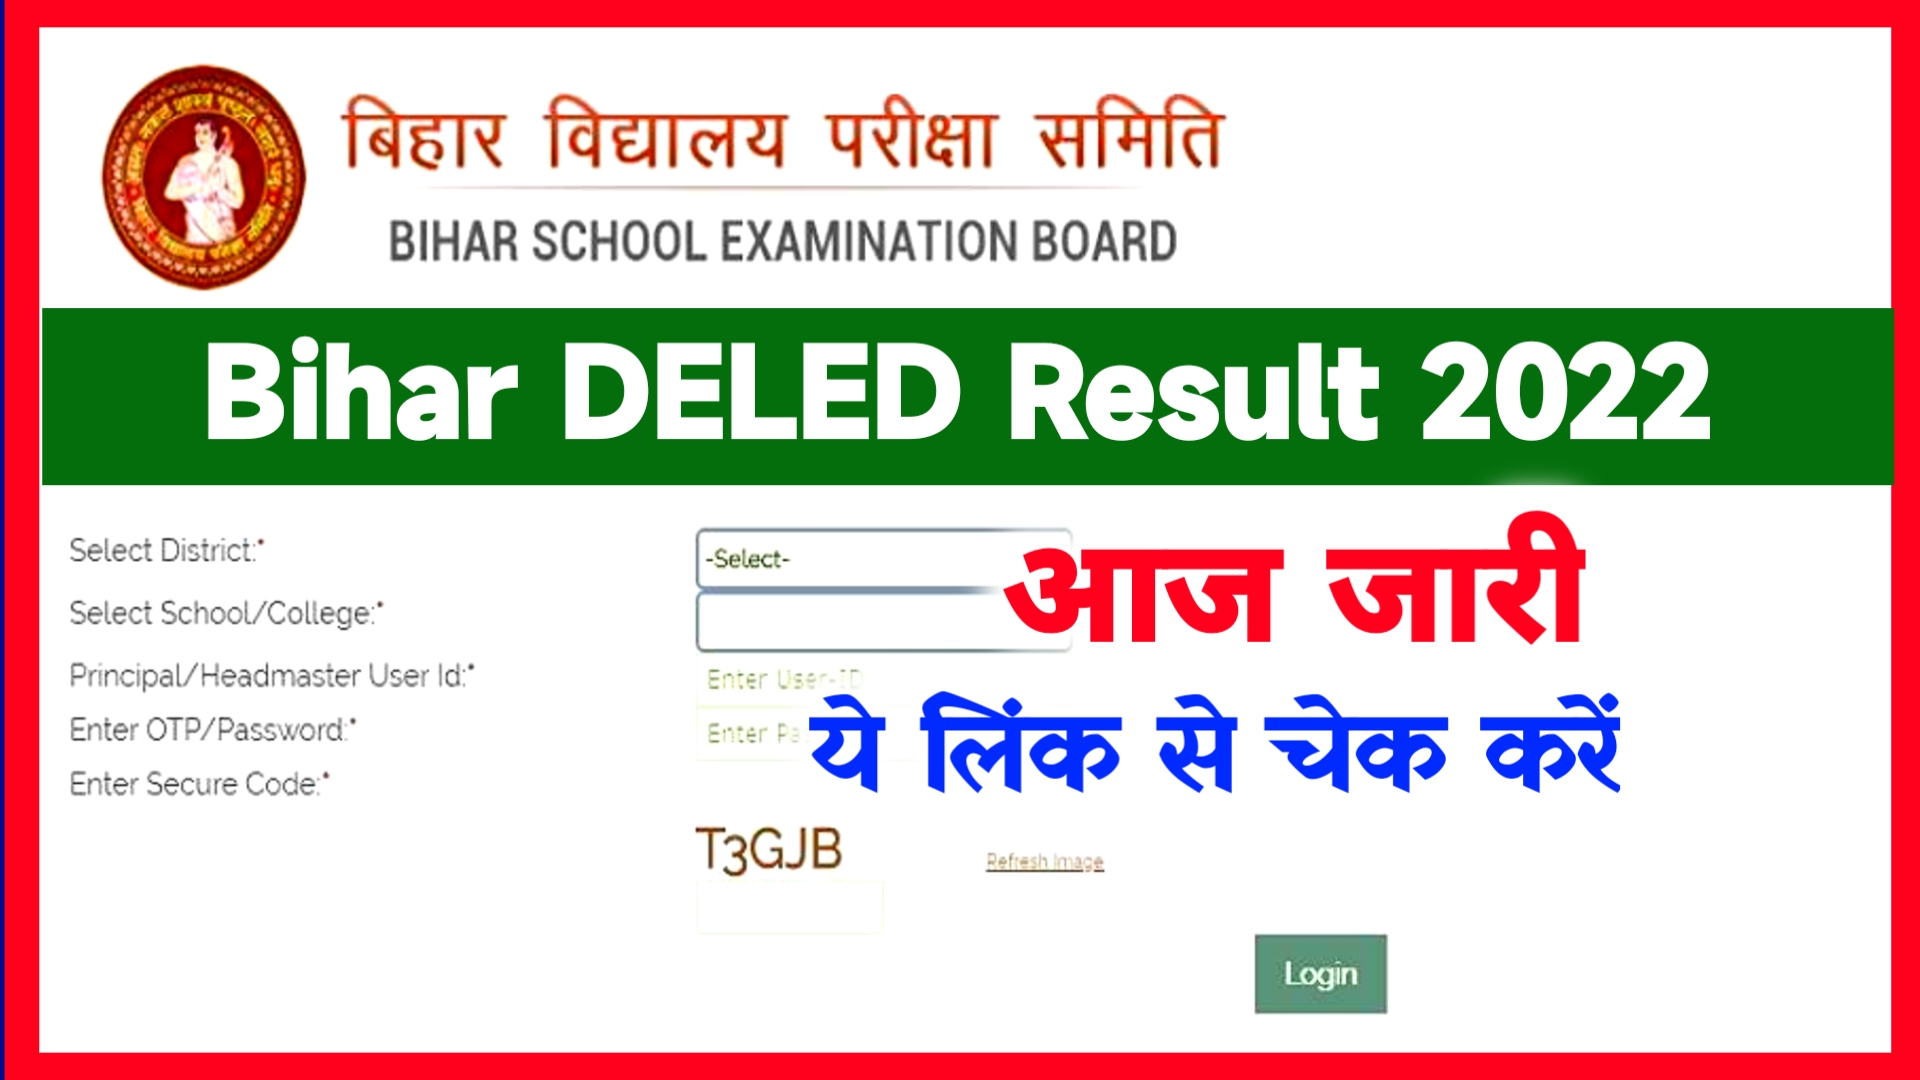 Bihar DELED Result 2022 Link ~ Merit List Pdf, Scorecard, Cut Off Mark